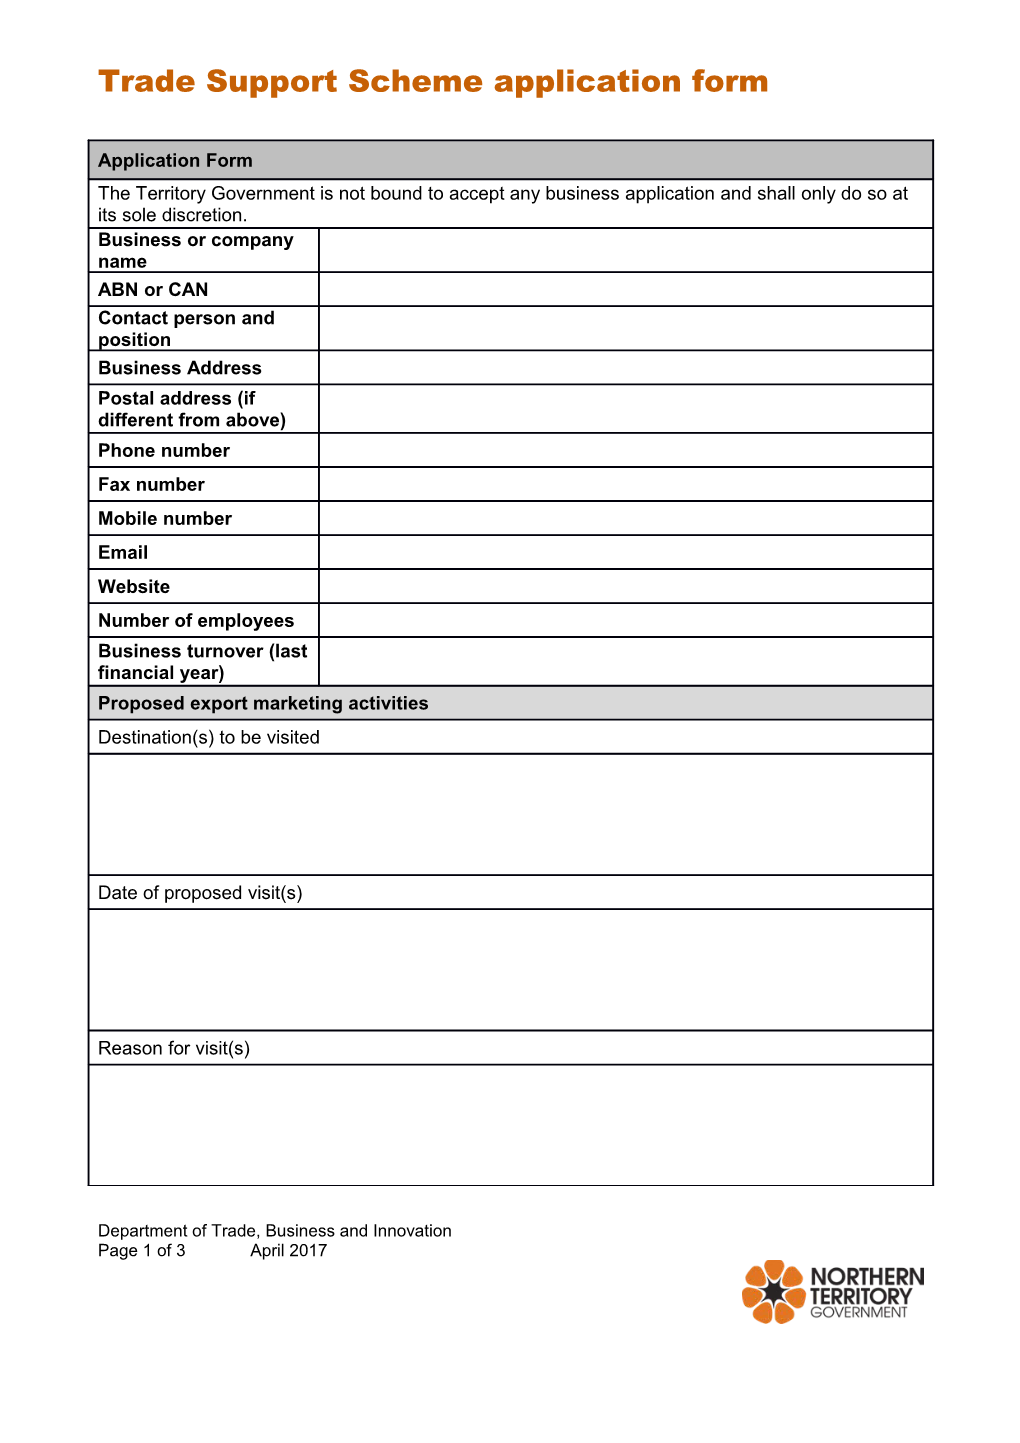 Trade Support Scheme Application Form